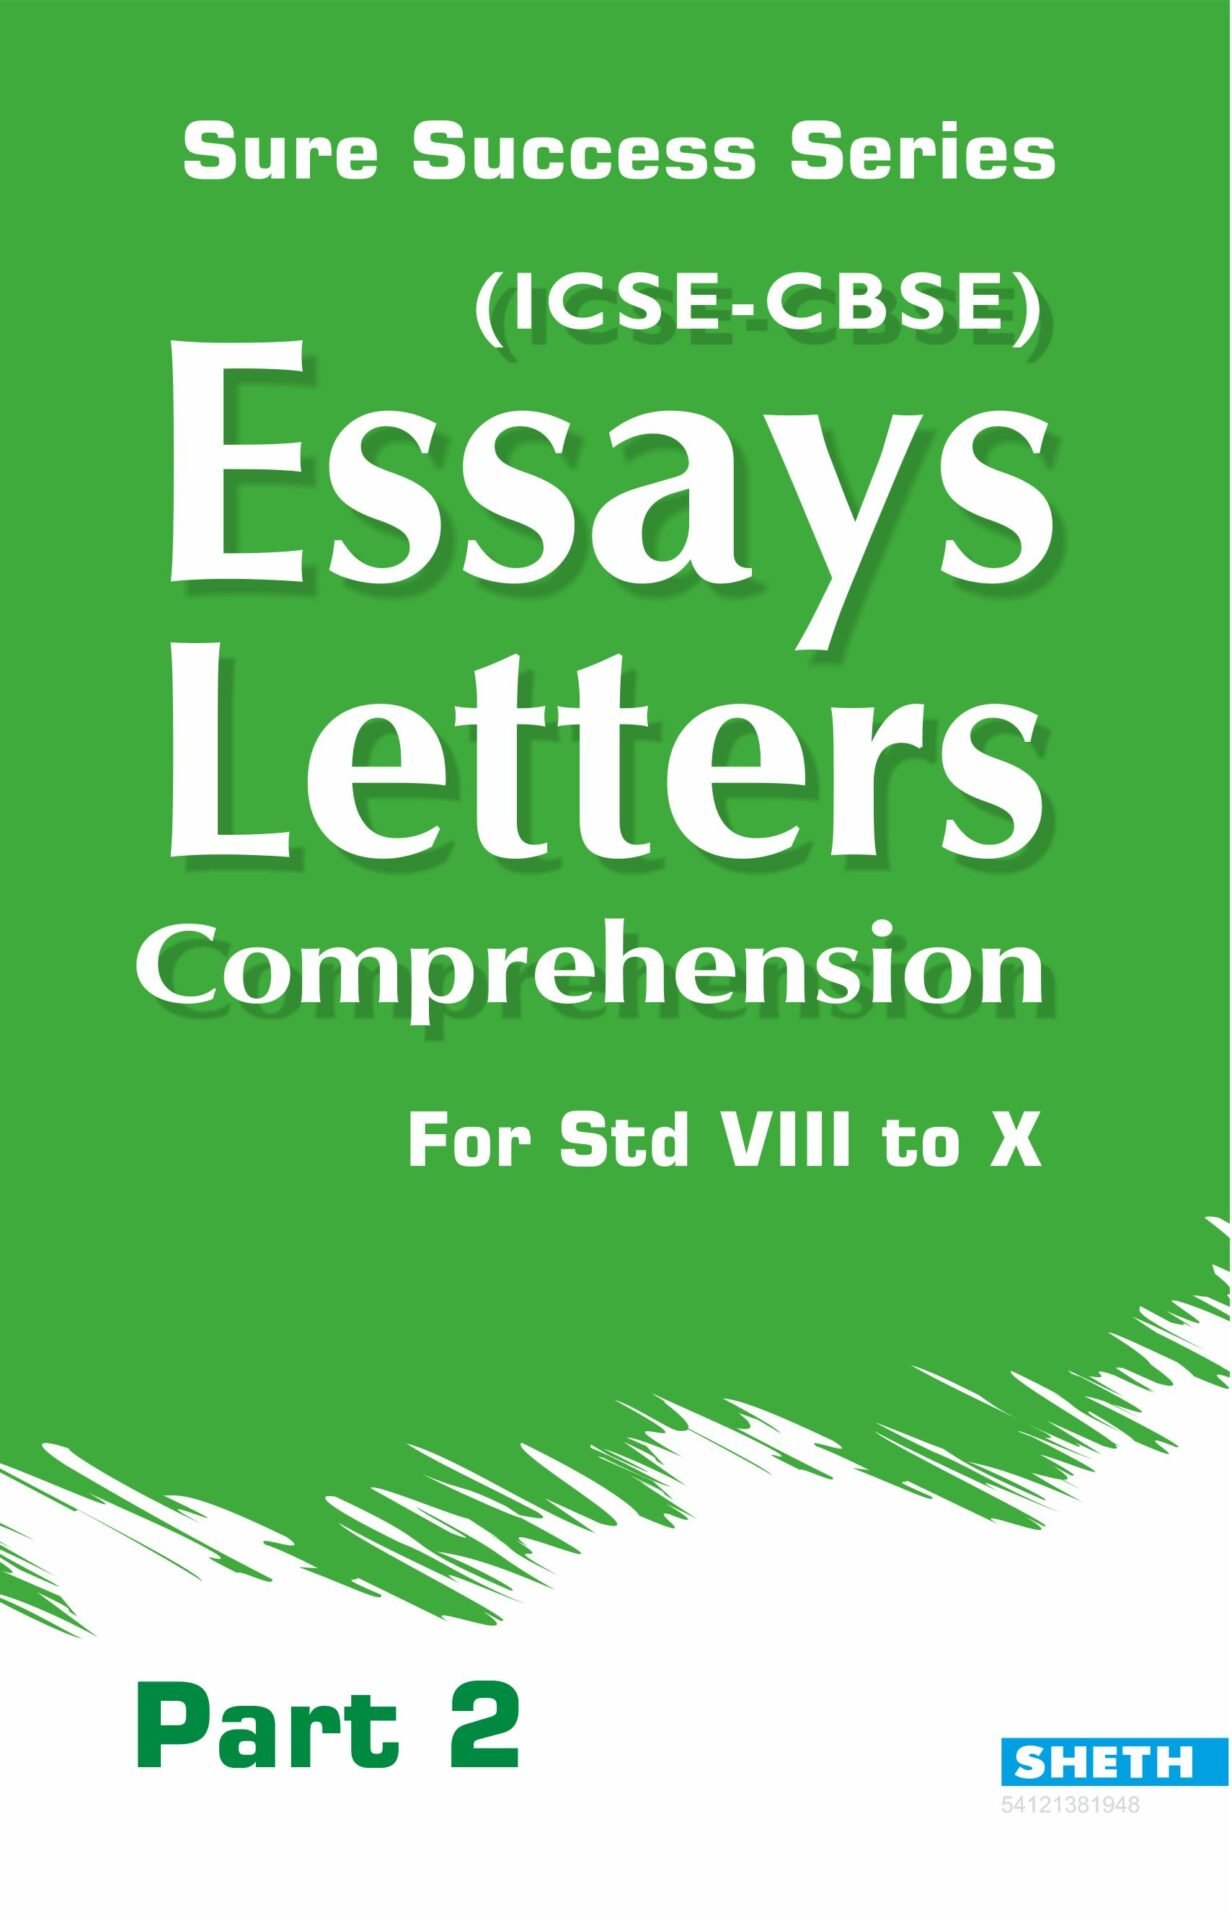 Sure Success Series Essays Letters Comprehension Part 2 for Std VIII to X ICSE CBSE 1